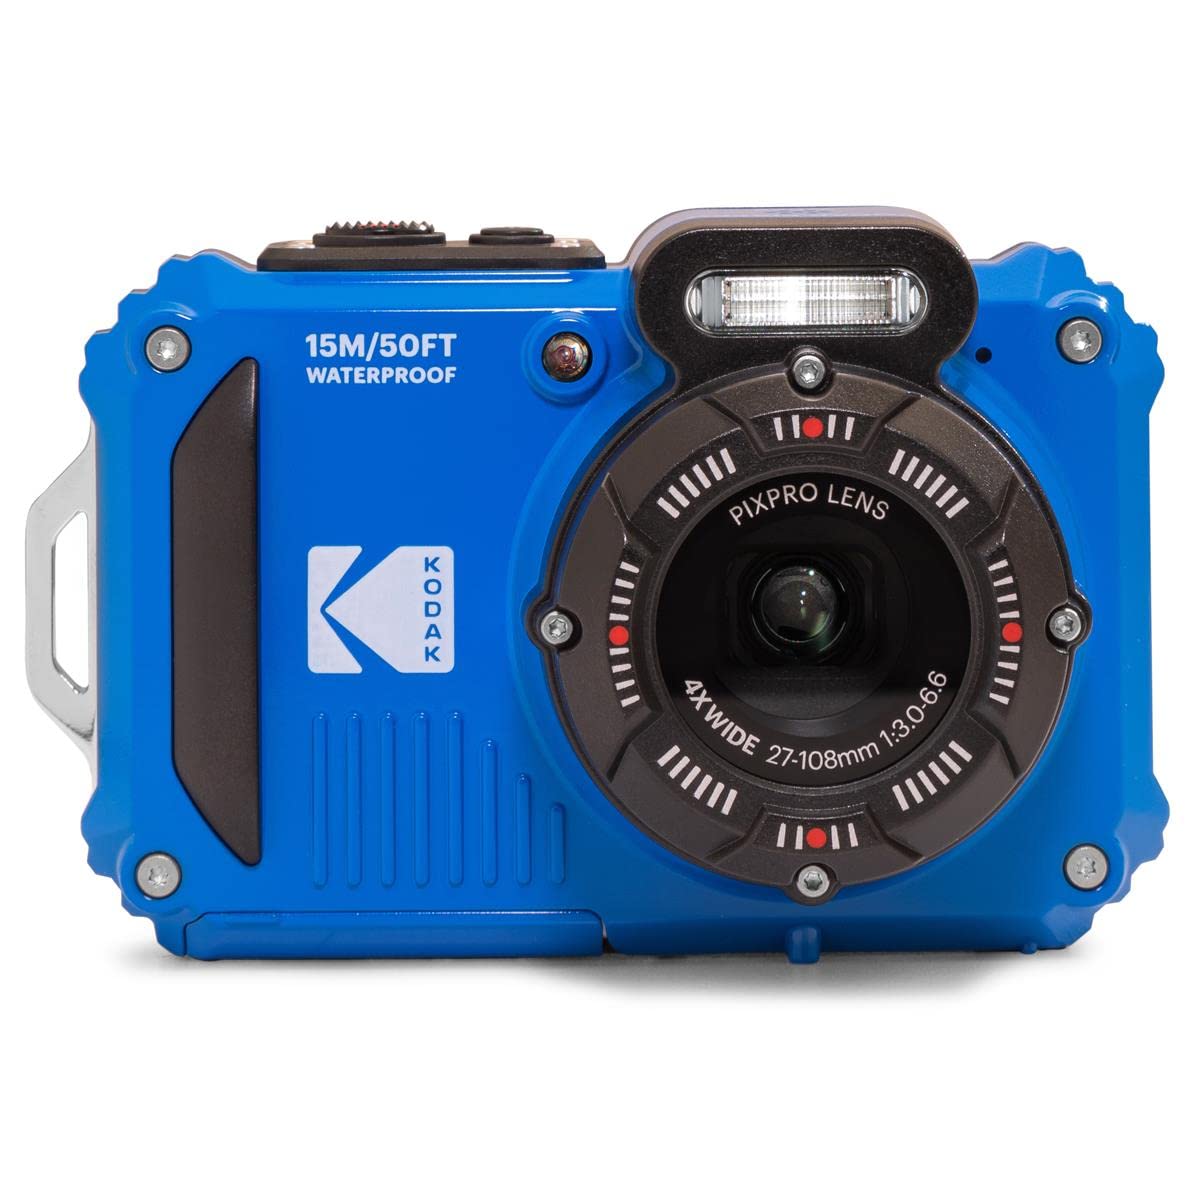 KODAK PIXPRO WPZ2 Rugged Waterproof Shockproof Dustproof WiFi Digital Camera 16MP 4X Optical Zoom 1080P Full HD Video Vlogging Camera 2.7